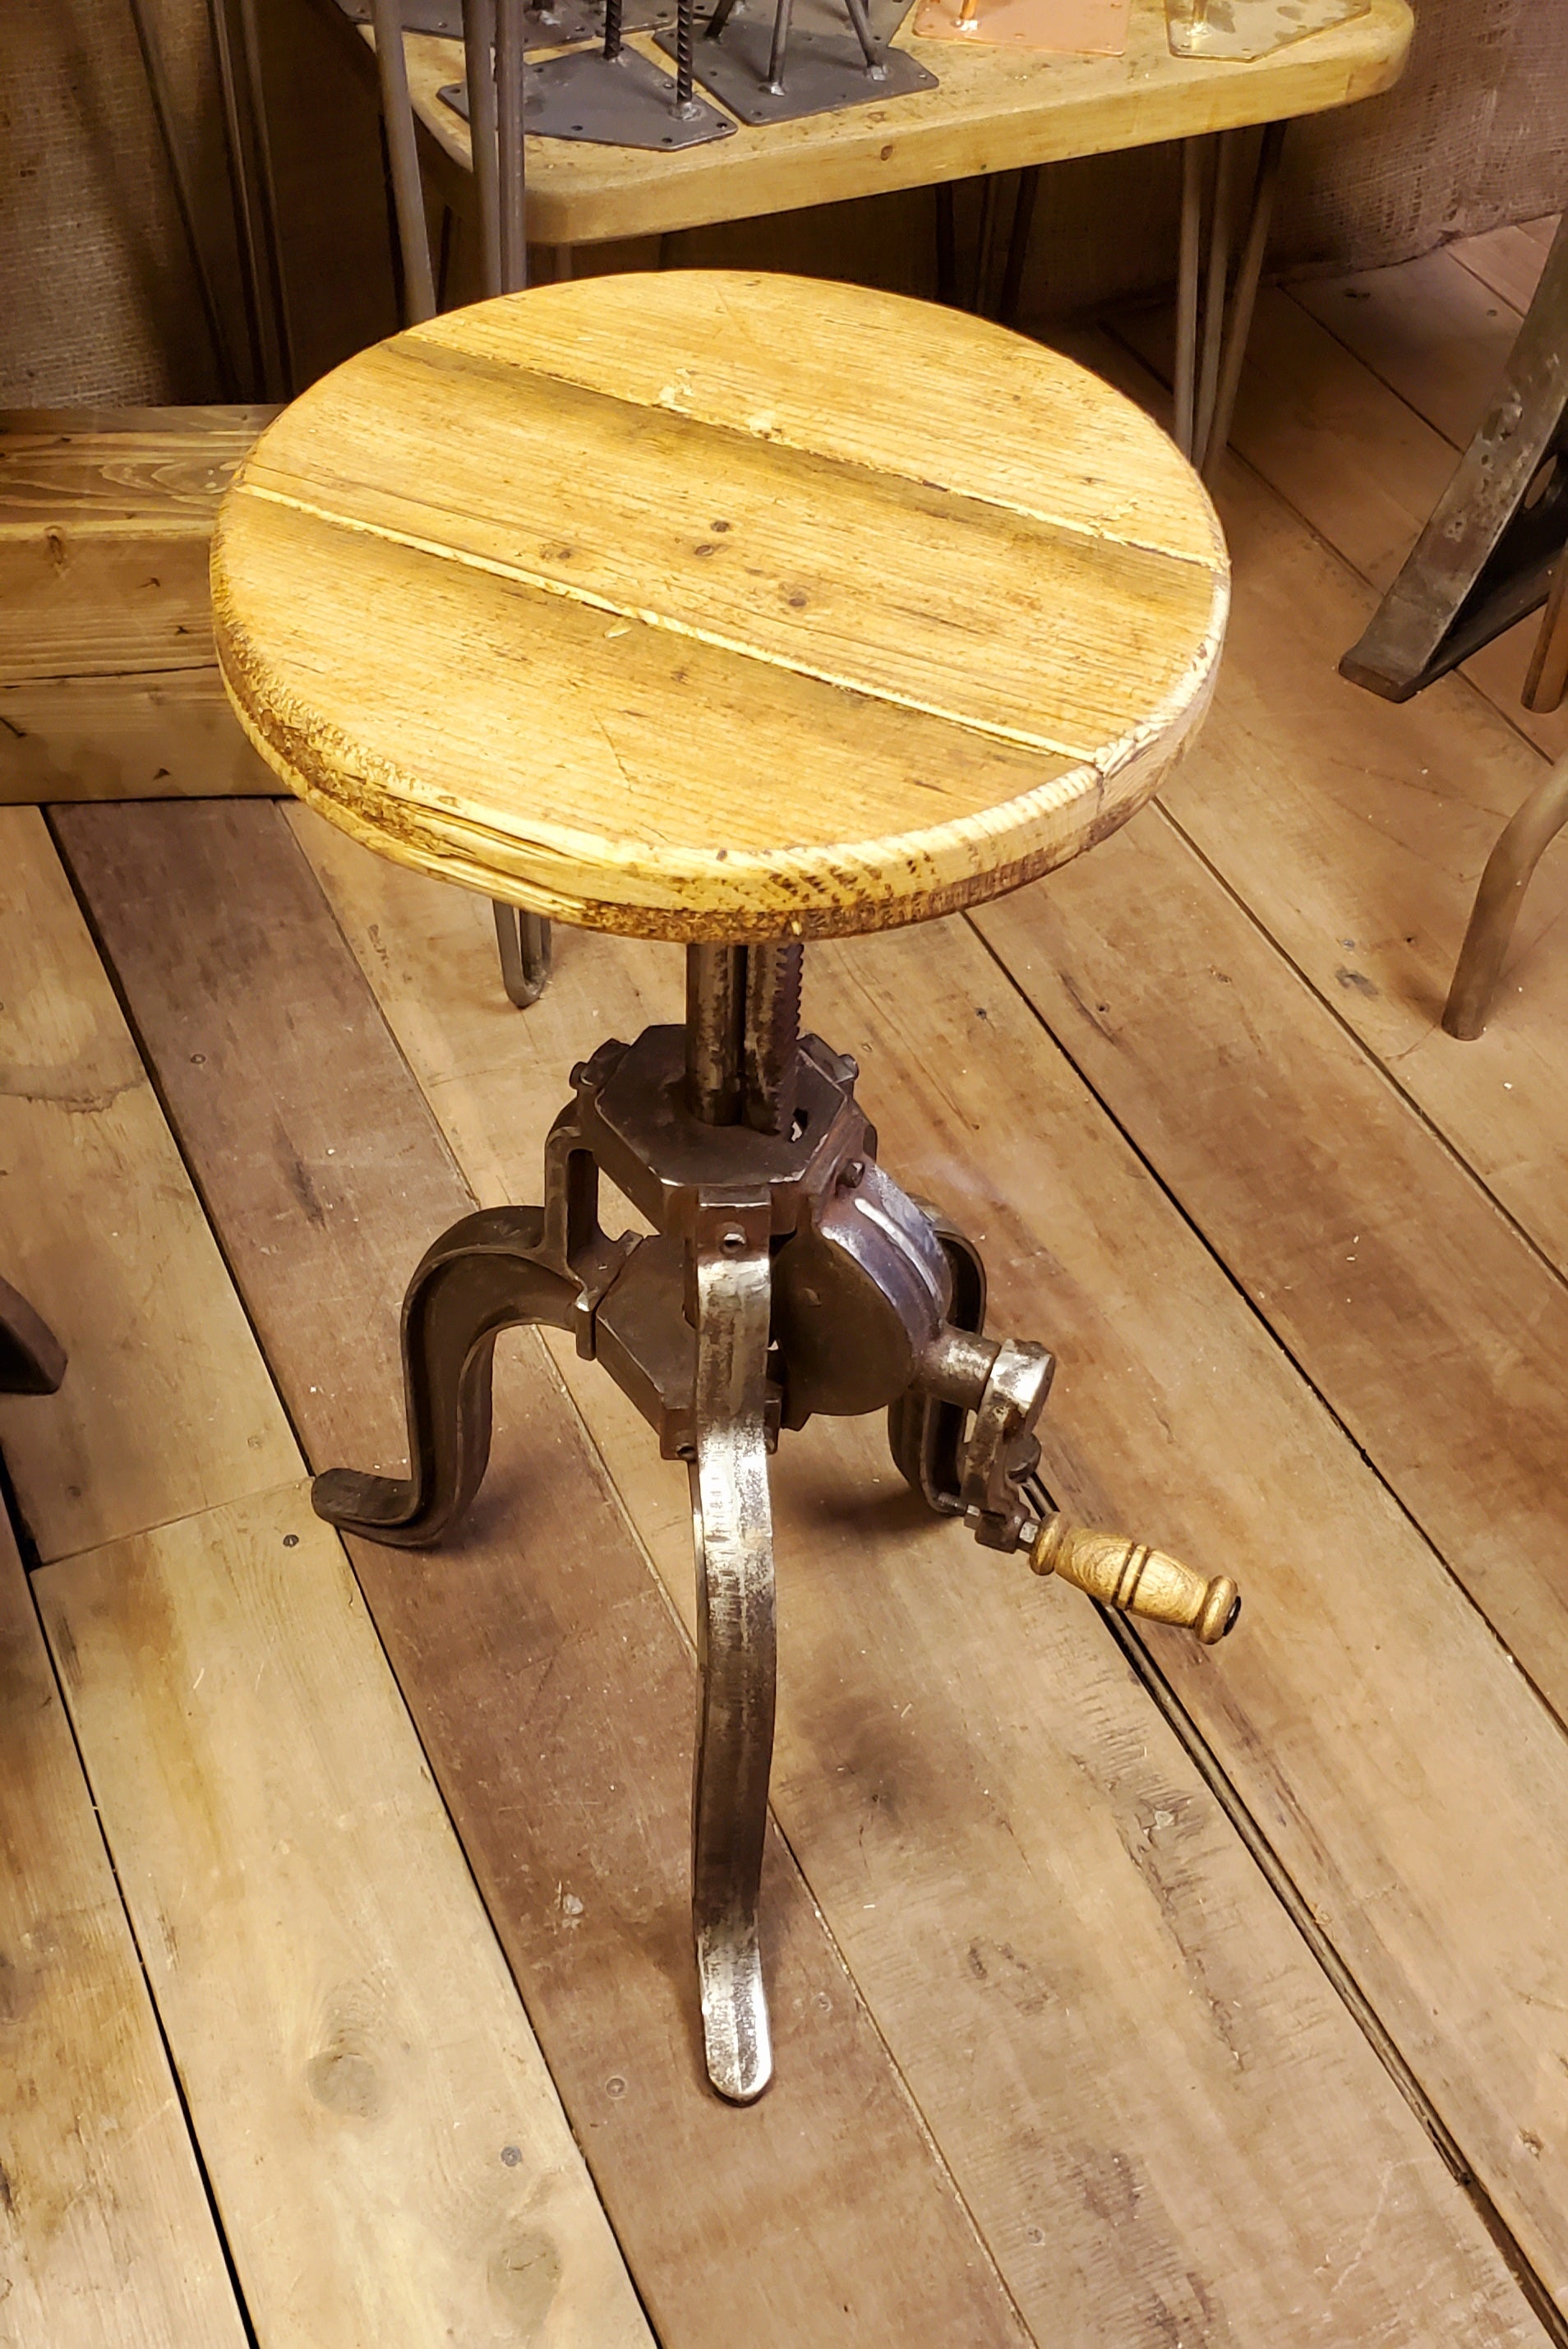 The 'Jarrat Stool' - Vintage Cast Iron Crank Handle Stool With Reclaimed Wood Top - Spearhead Collection - Stools - Adjustable Height Stool, crank handle stool, Industrial stool, Seating, vin